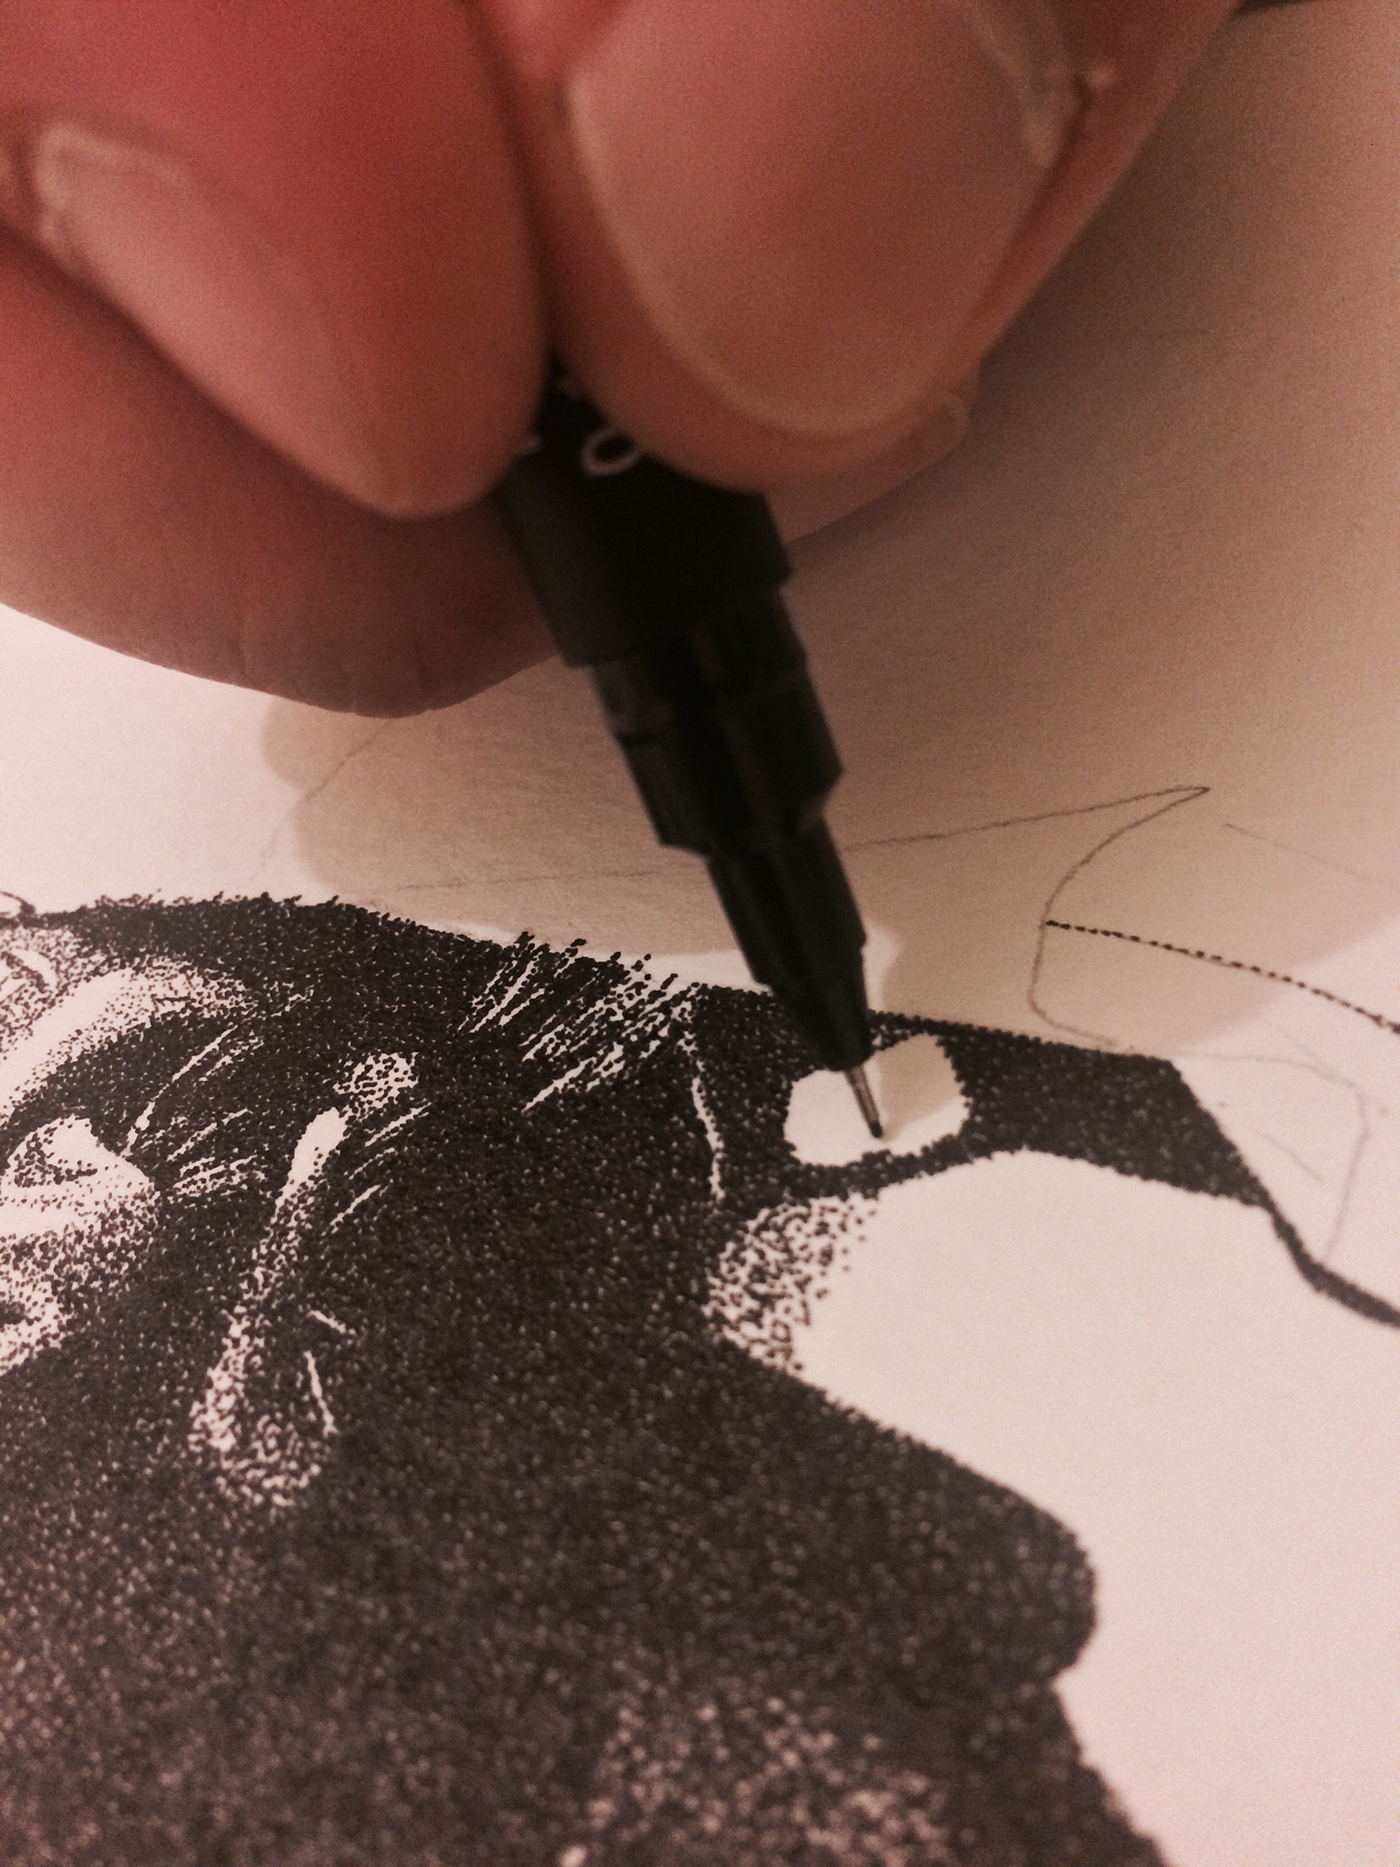 Hero wolverine logan stippling ink watercolour